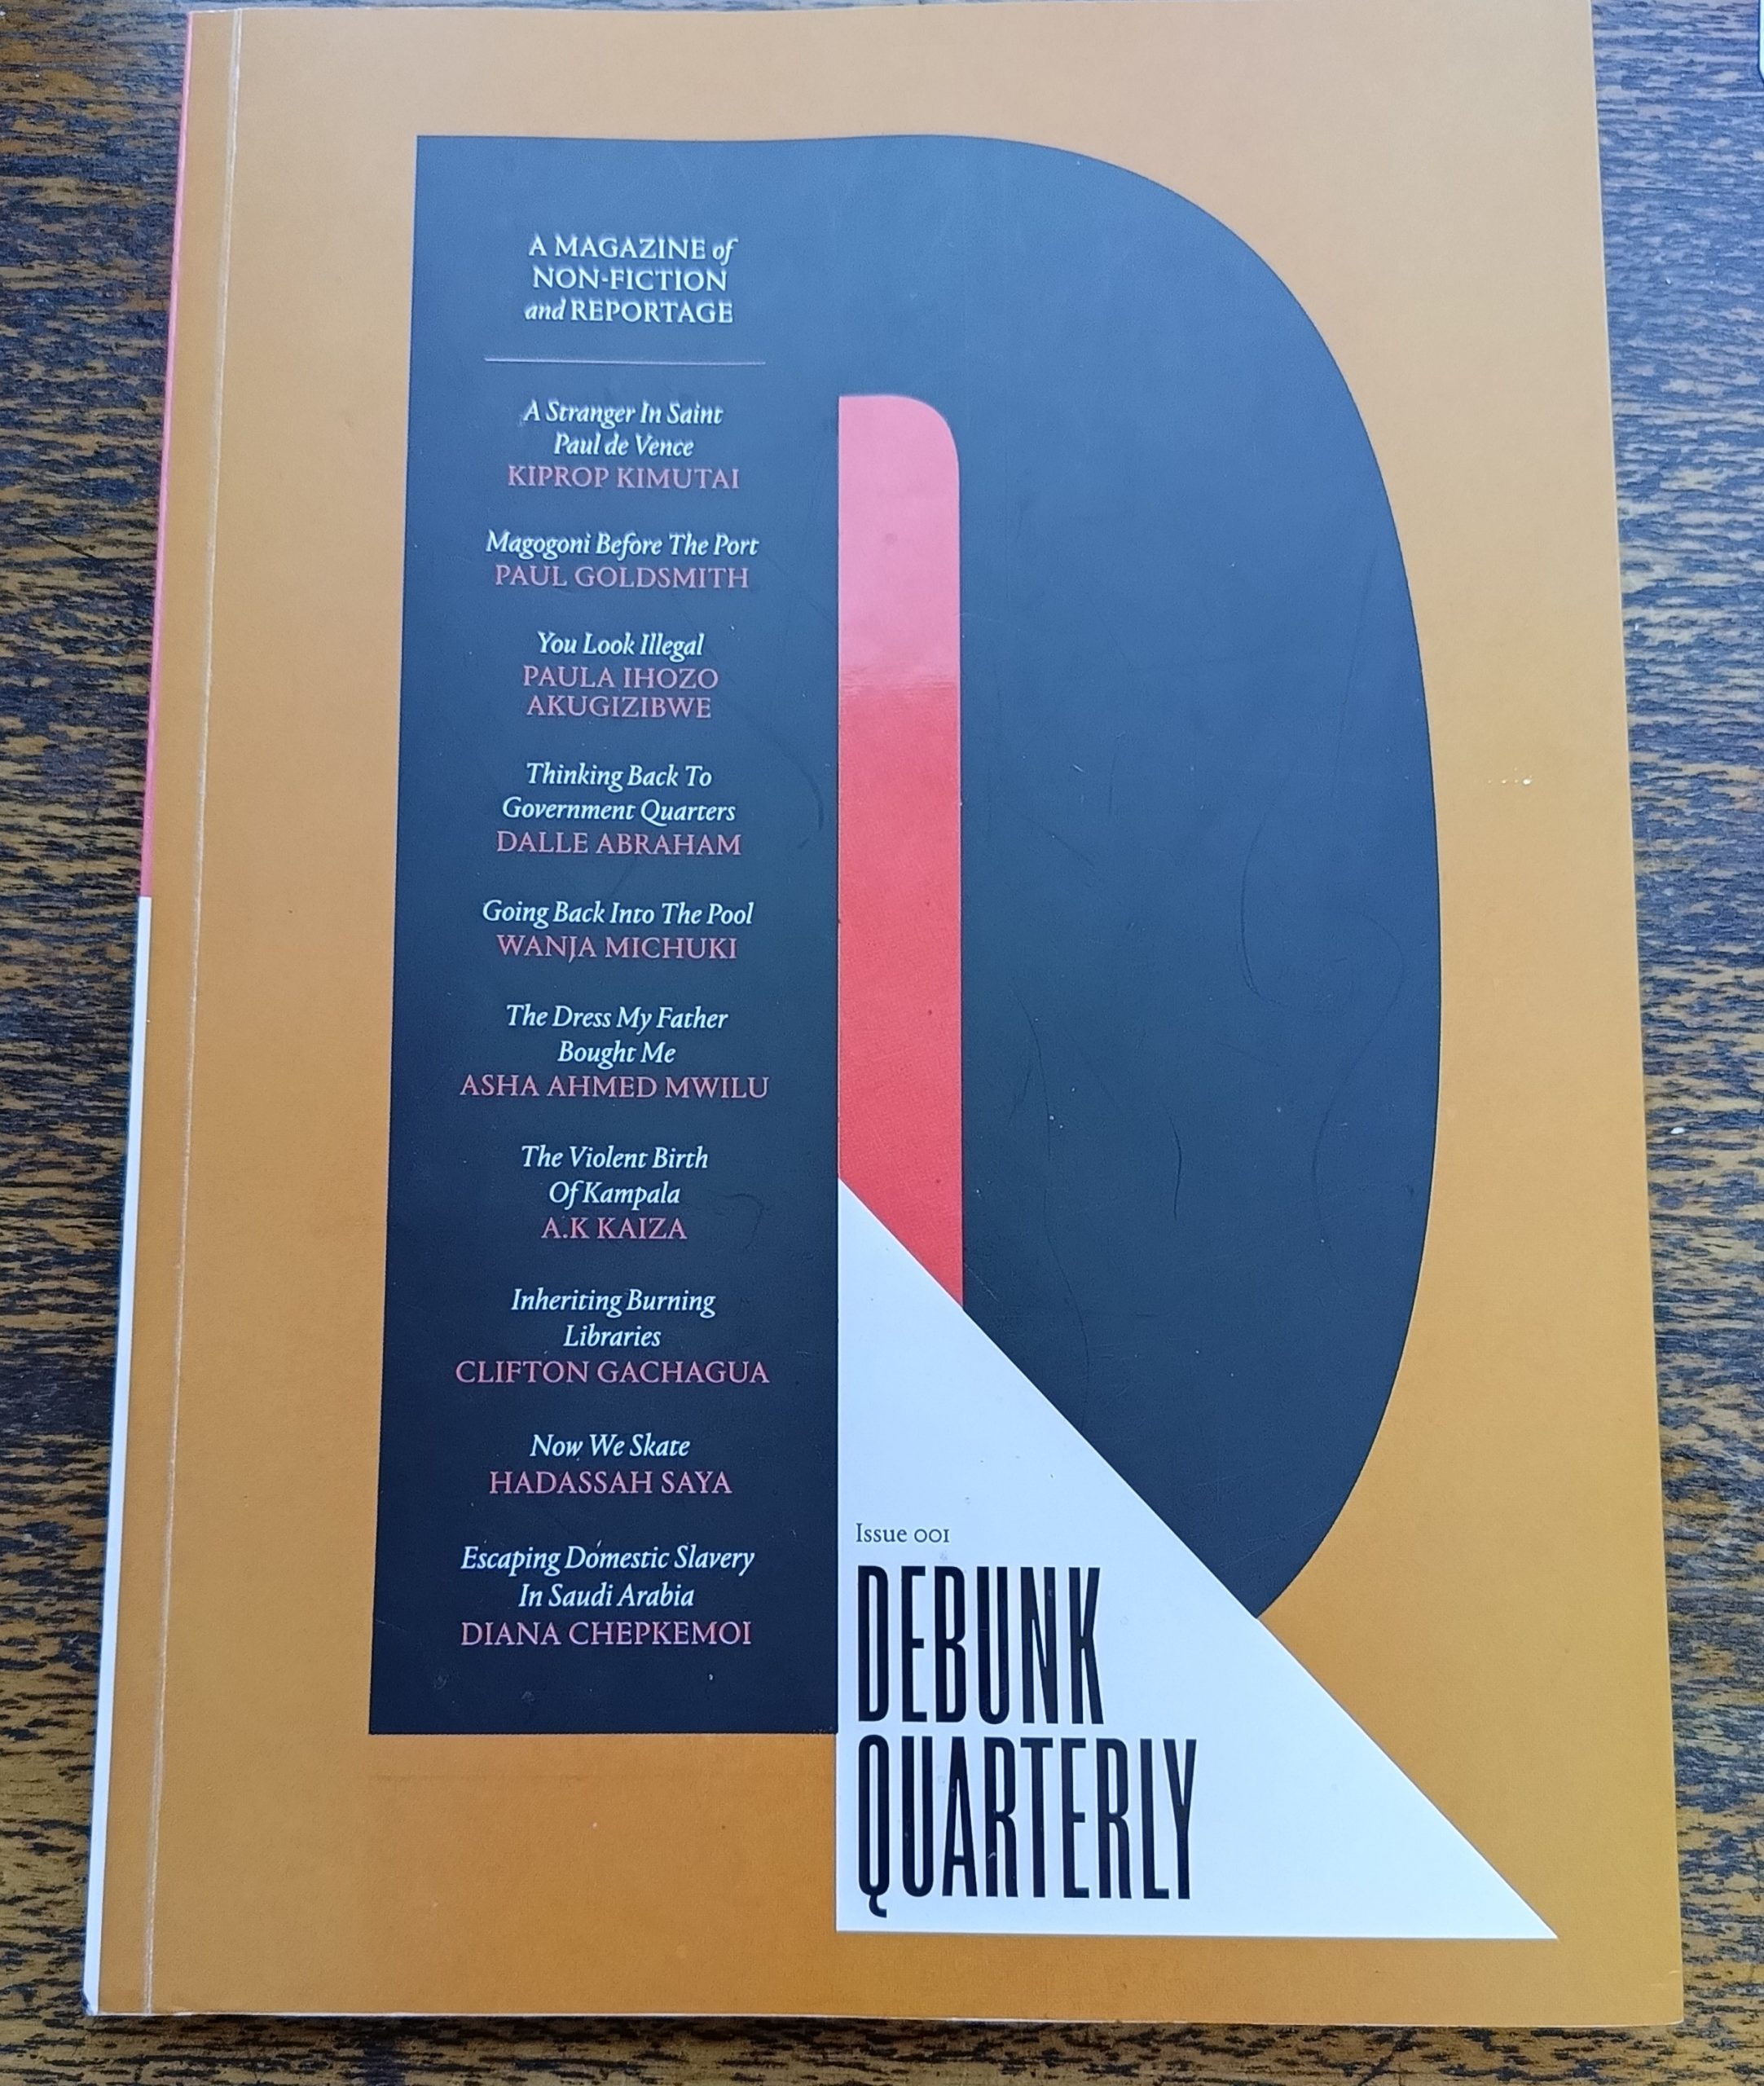 Debunk Quarterly issue 001